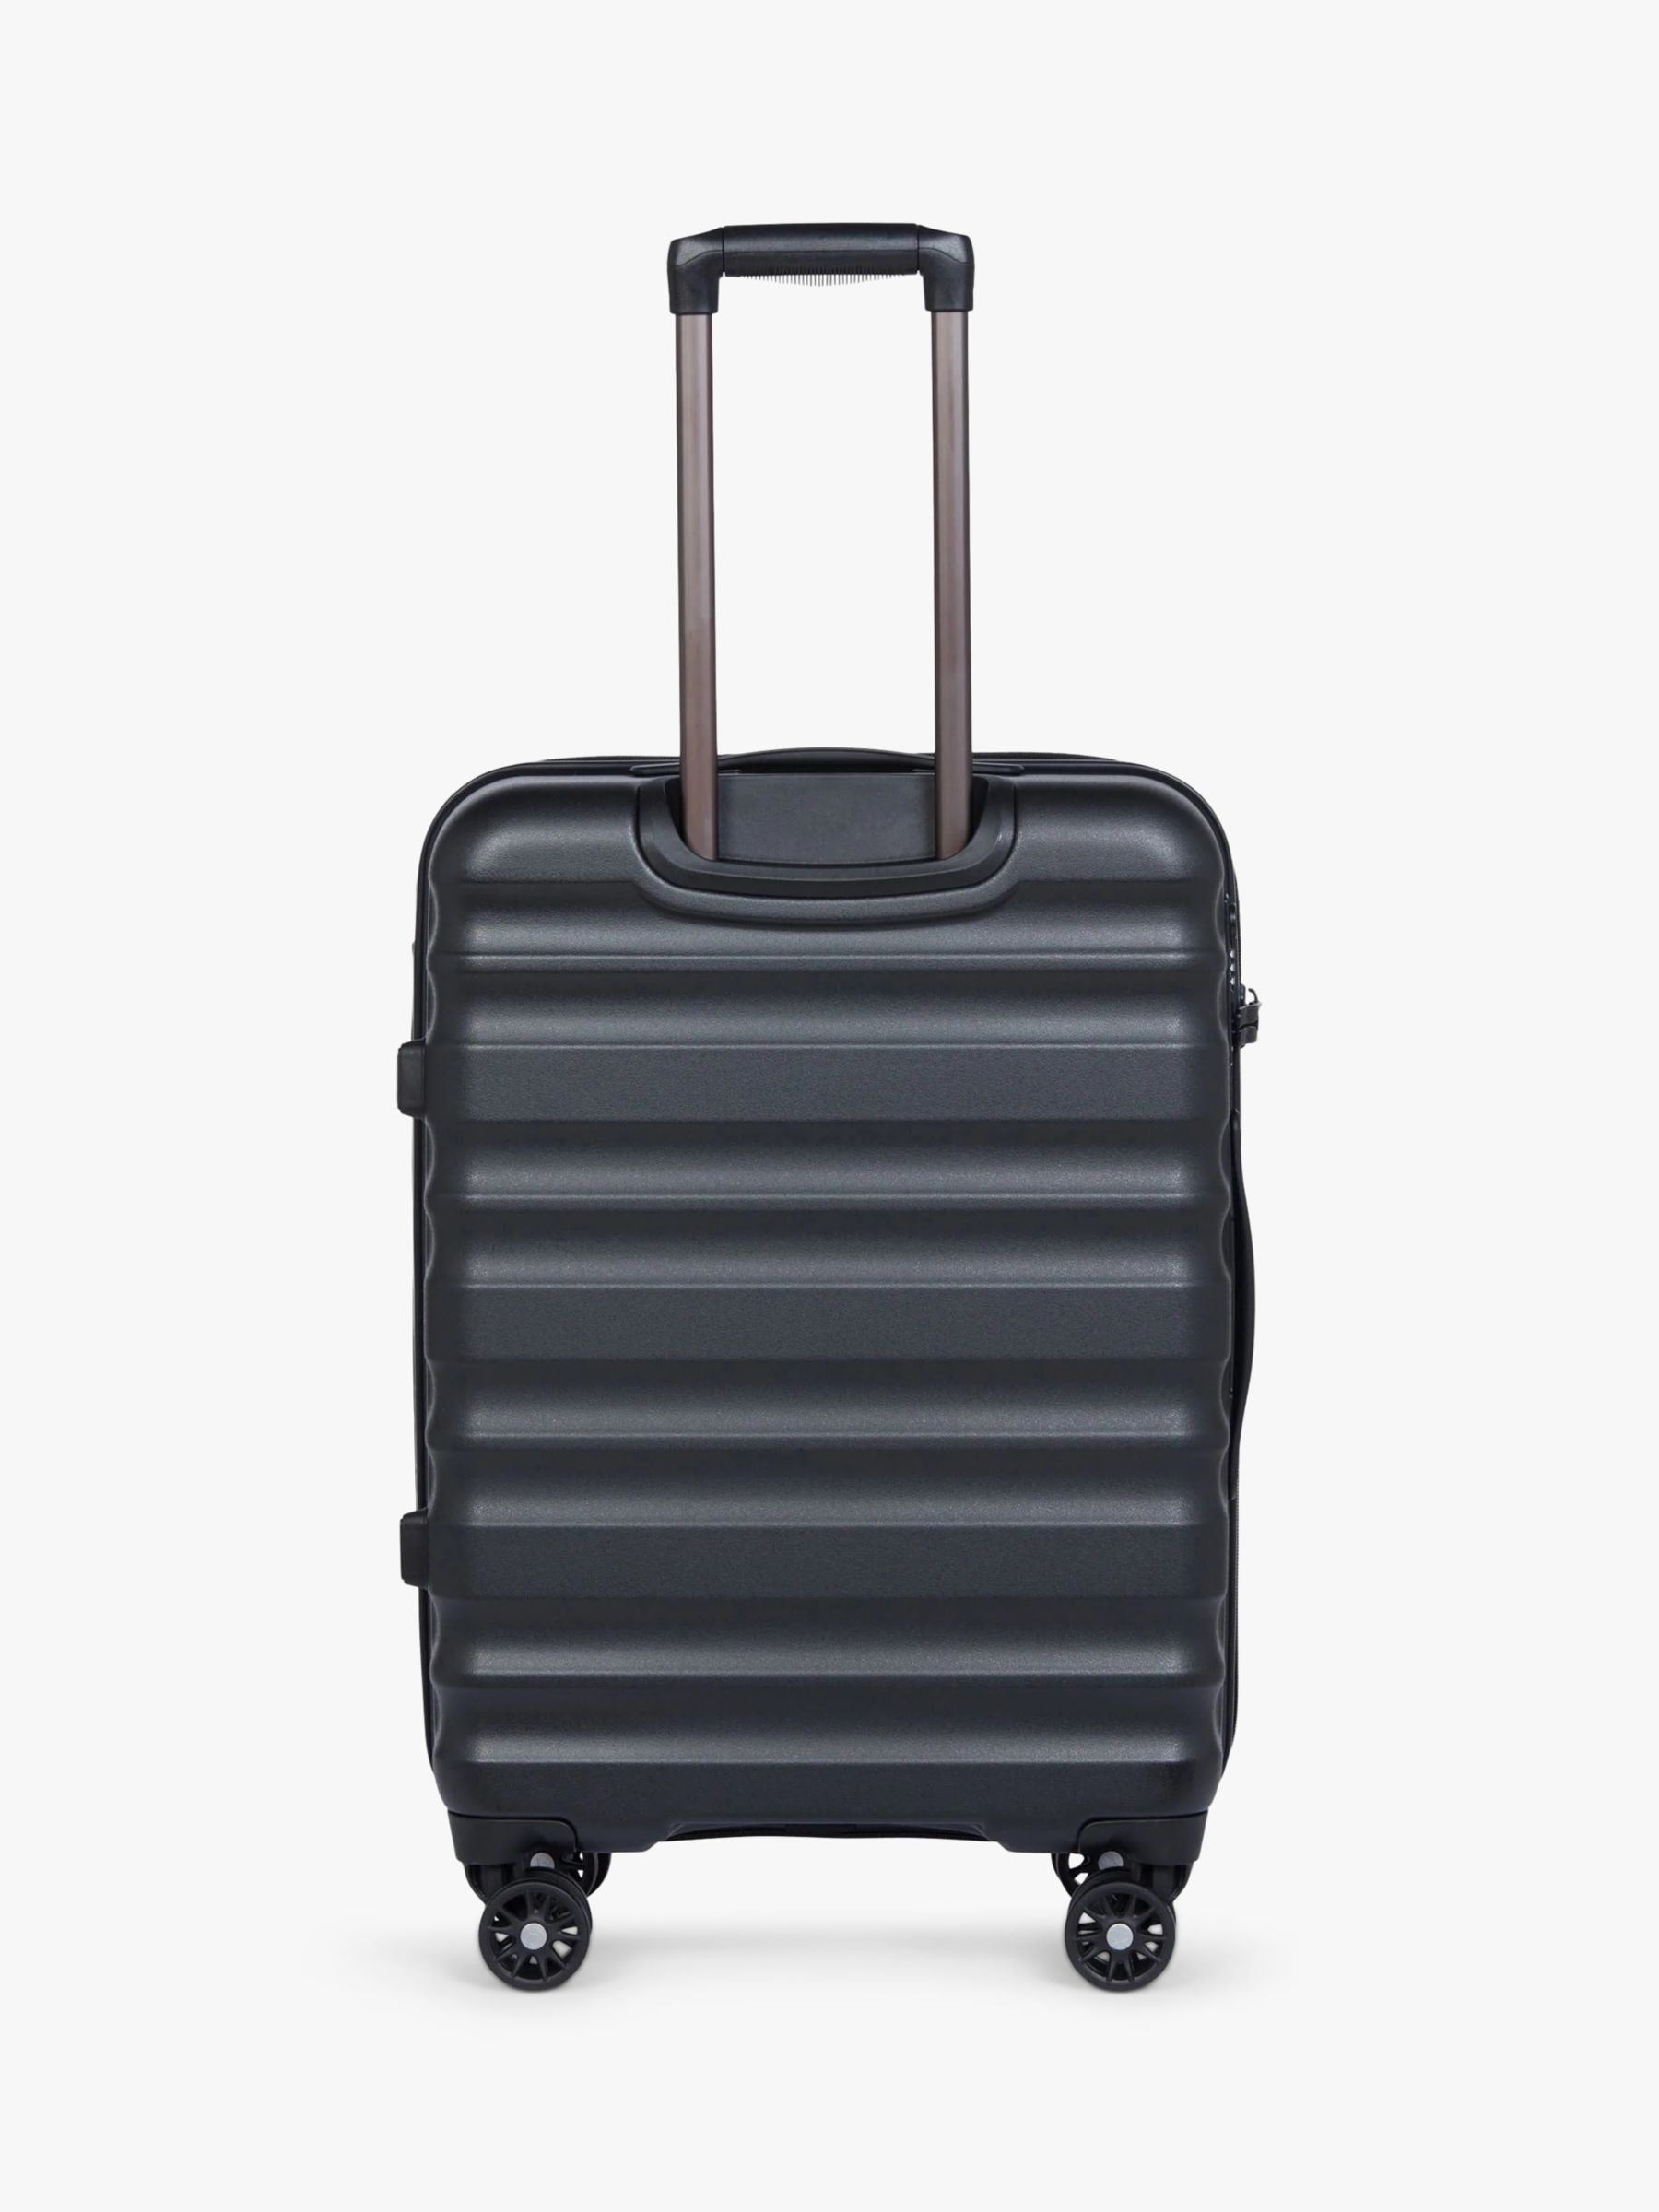 Antler Clifton 4-Wheel 68cm Medium Expandable Suitcase, Black